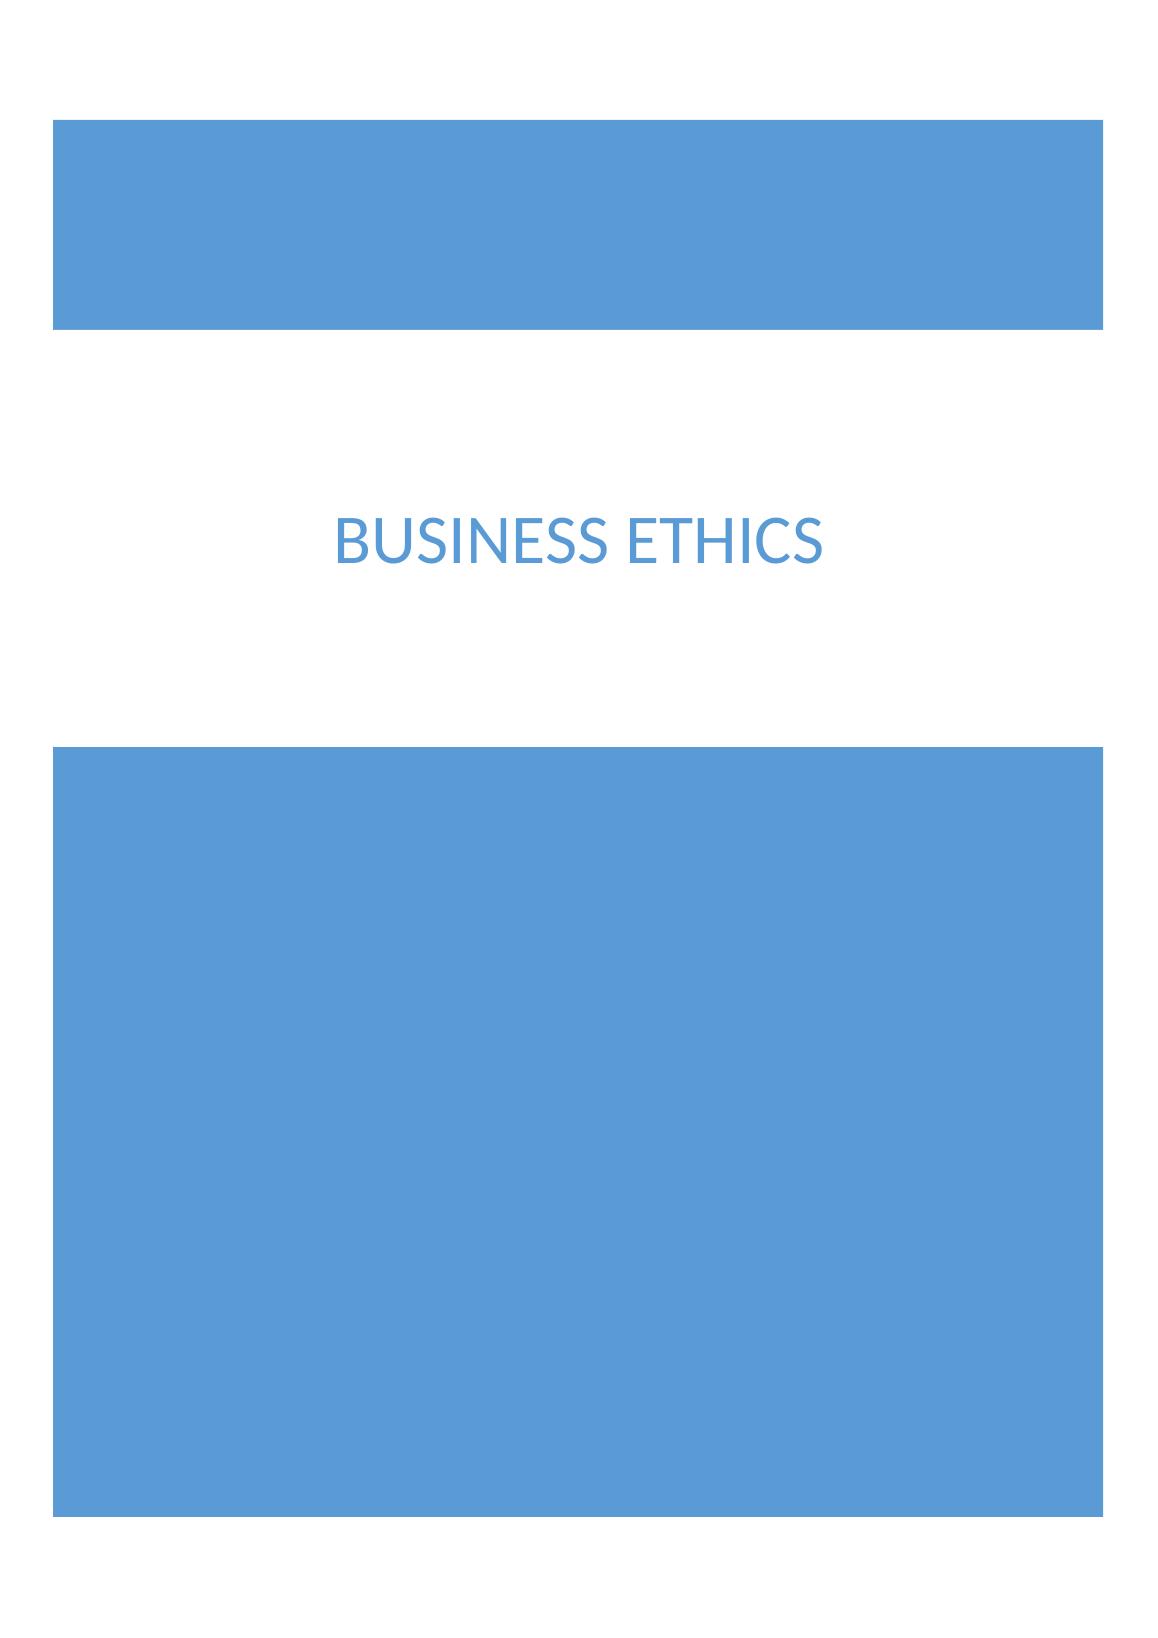 Business Ethics - Critical Assessment of CSR Concept_1